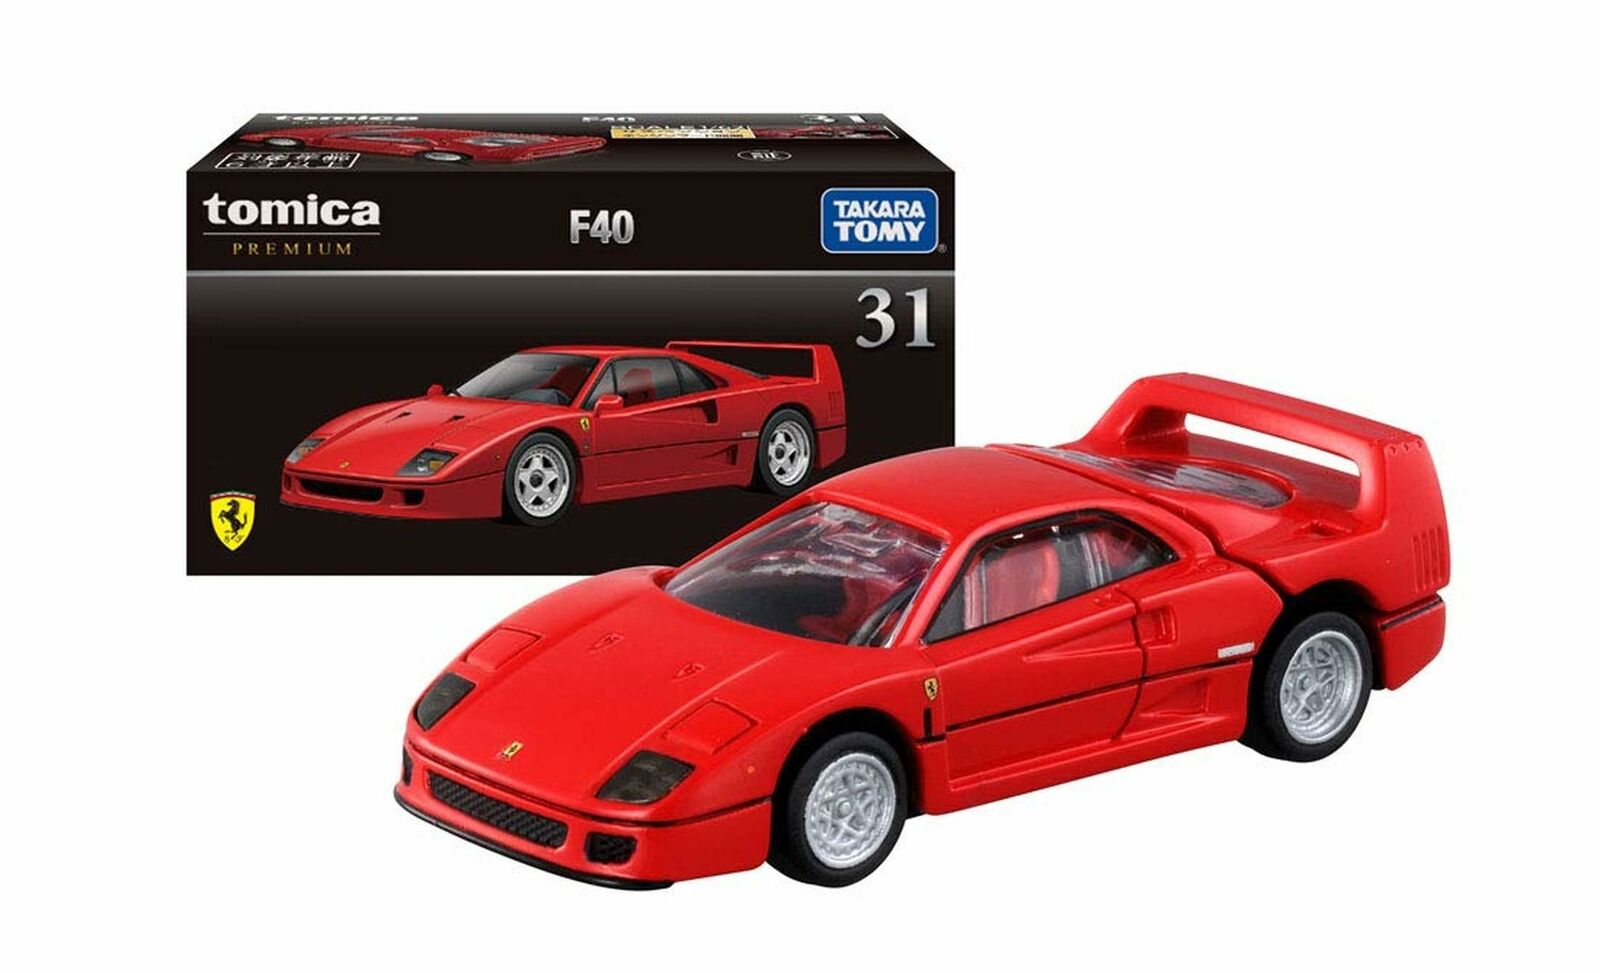 Takara Tomy TOMICA Premium No.31 Ferrari RED F40 1:62 Diecast Toy Car